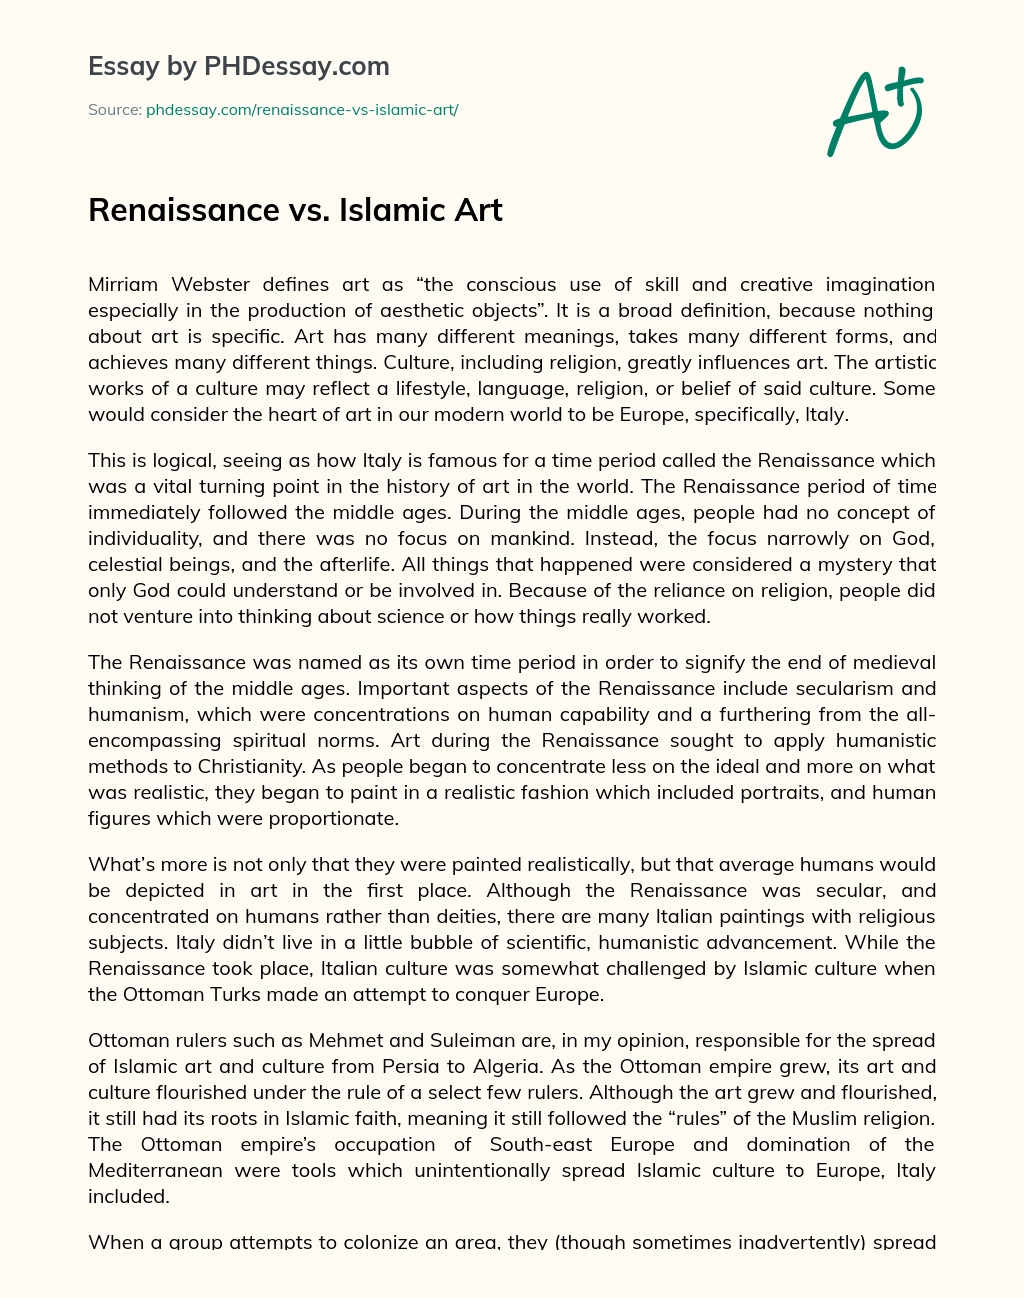 Renaissance vs. Islamic Art essay